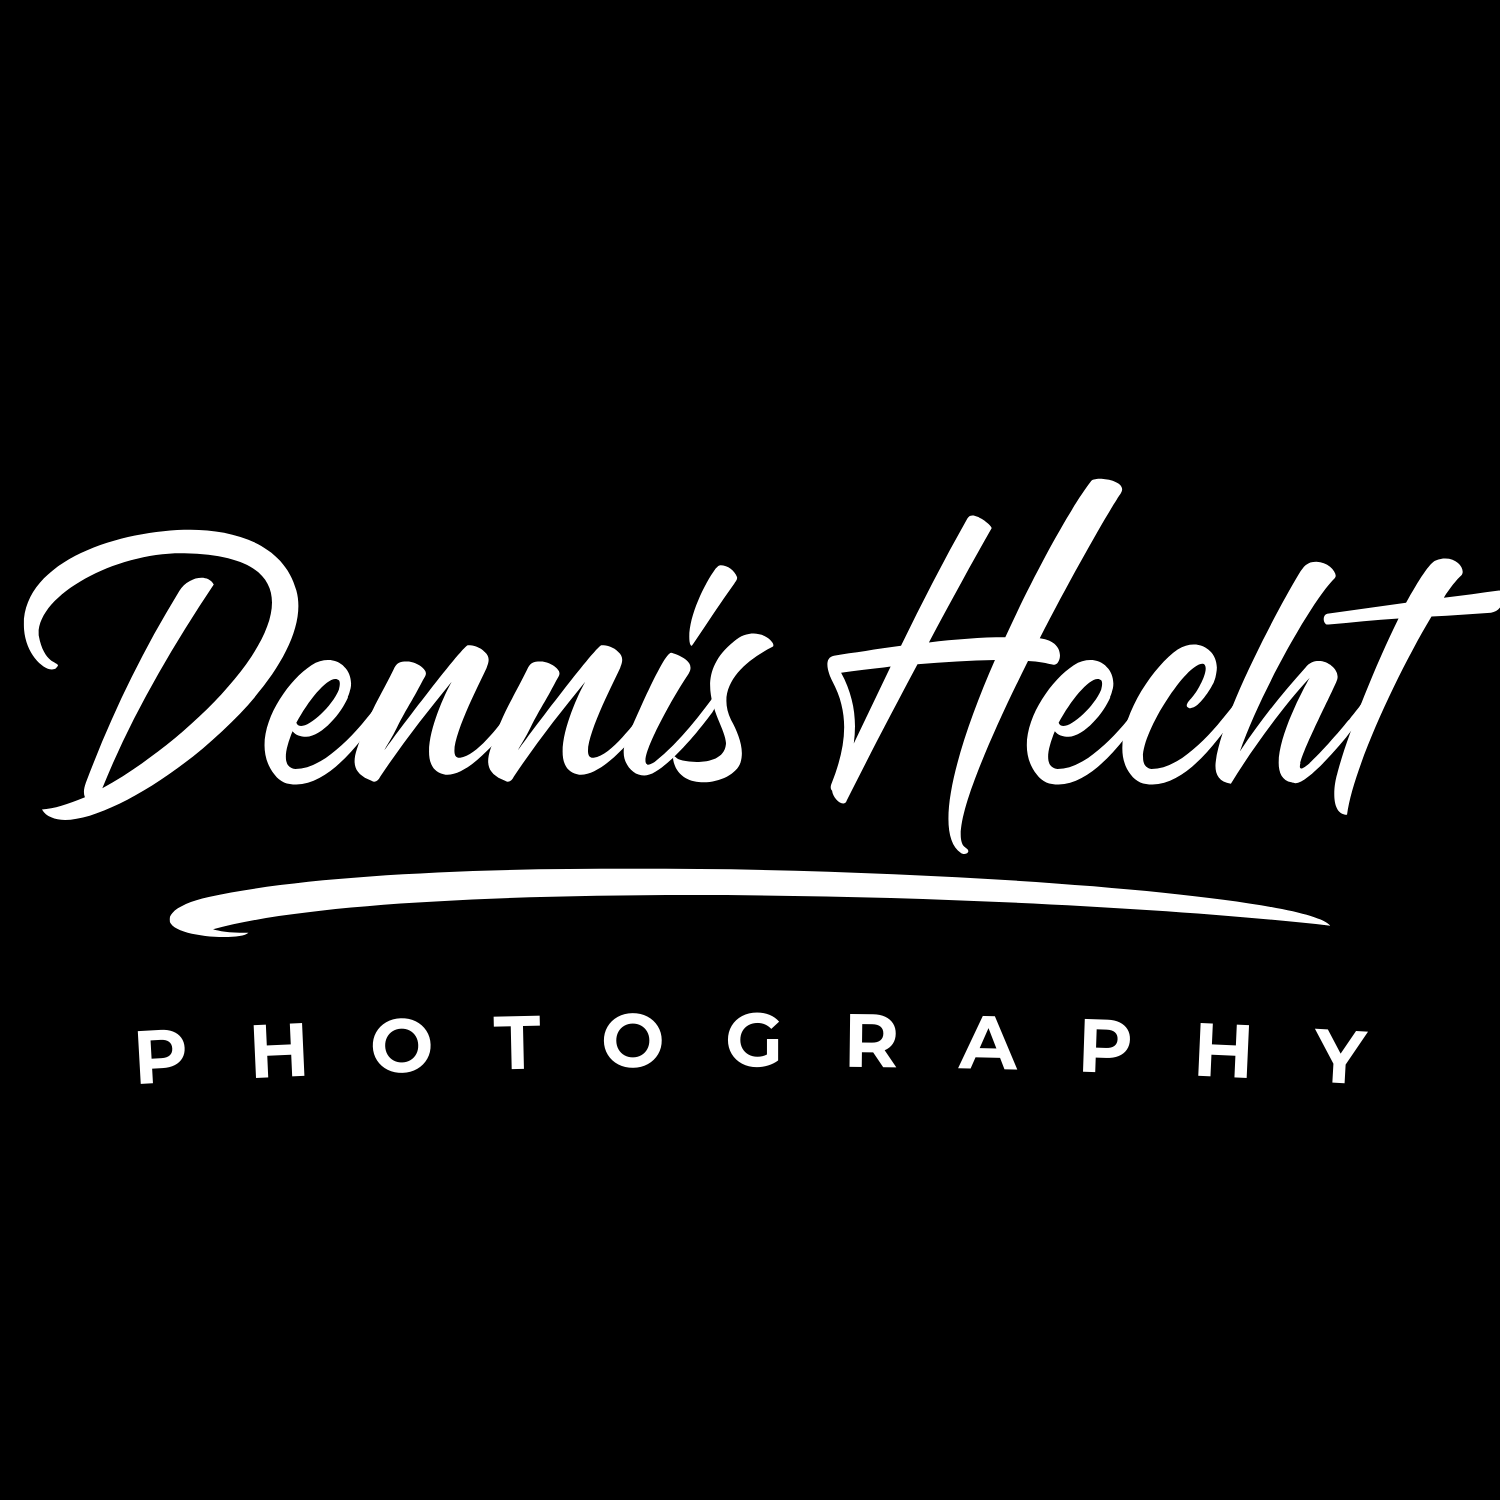 Dennis Hecht Photography